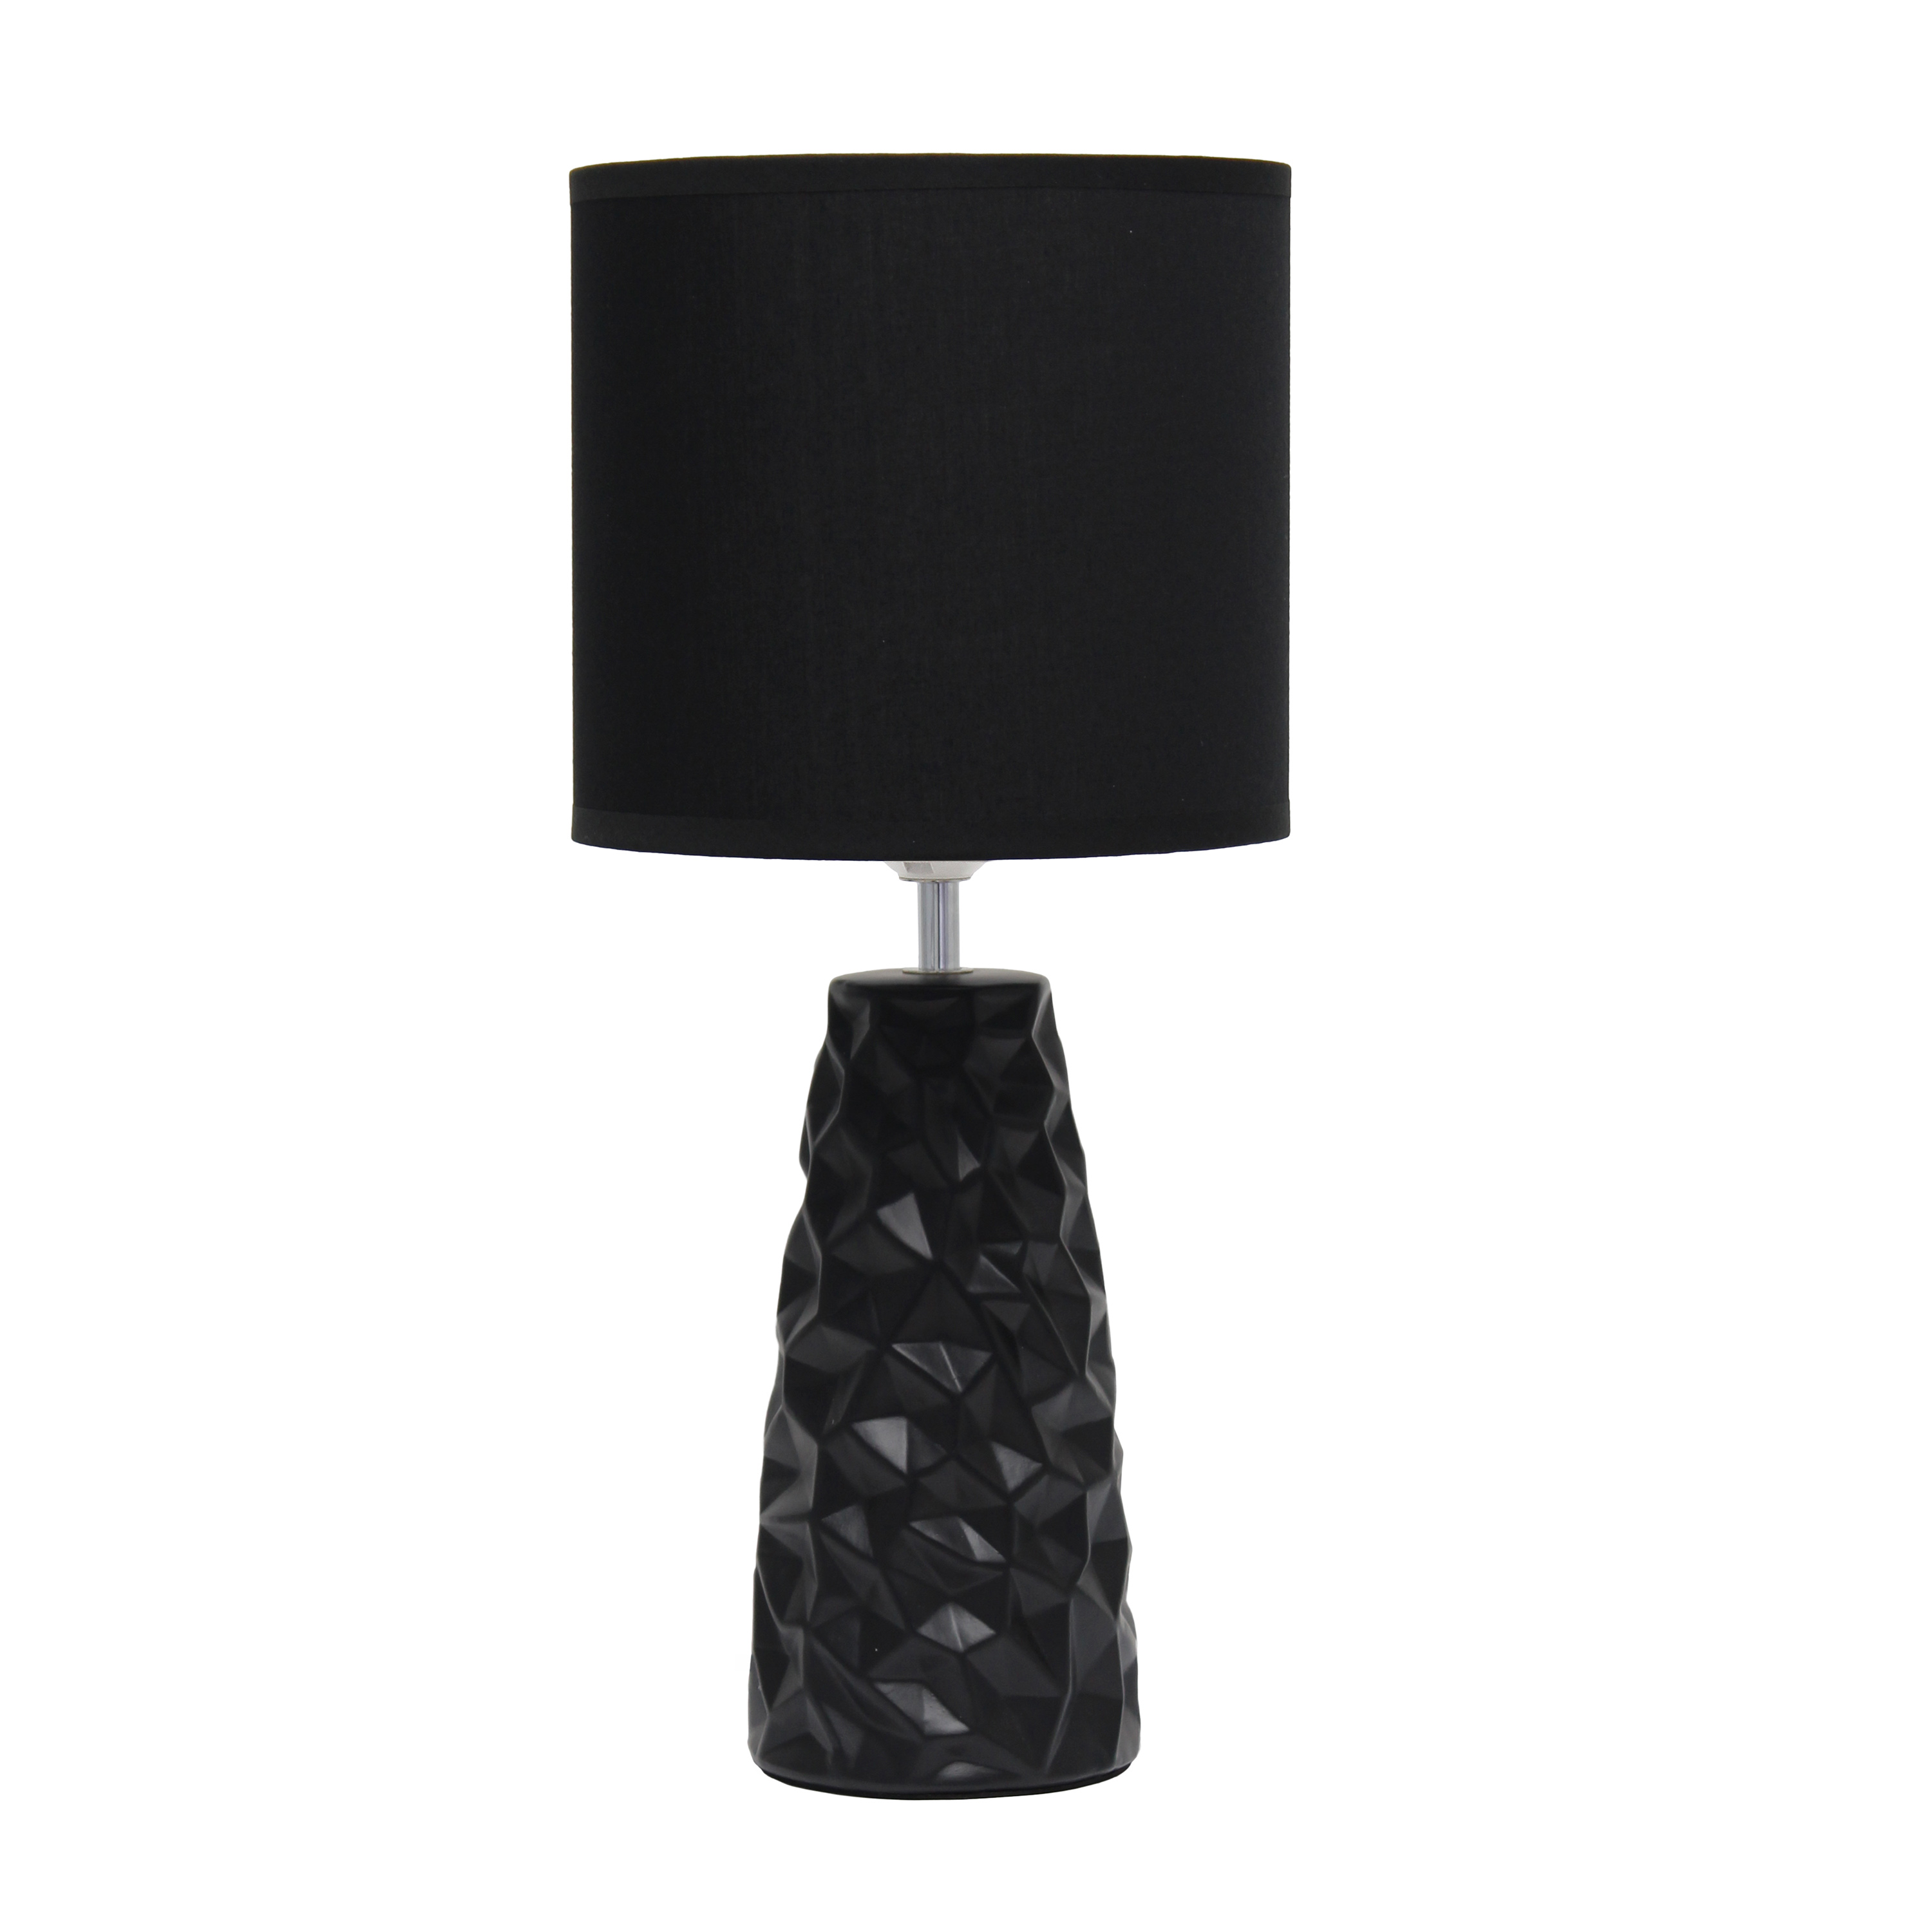 Simple Designs Sculpted Ceramic Table Lamp, Black